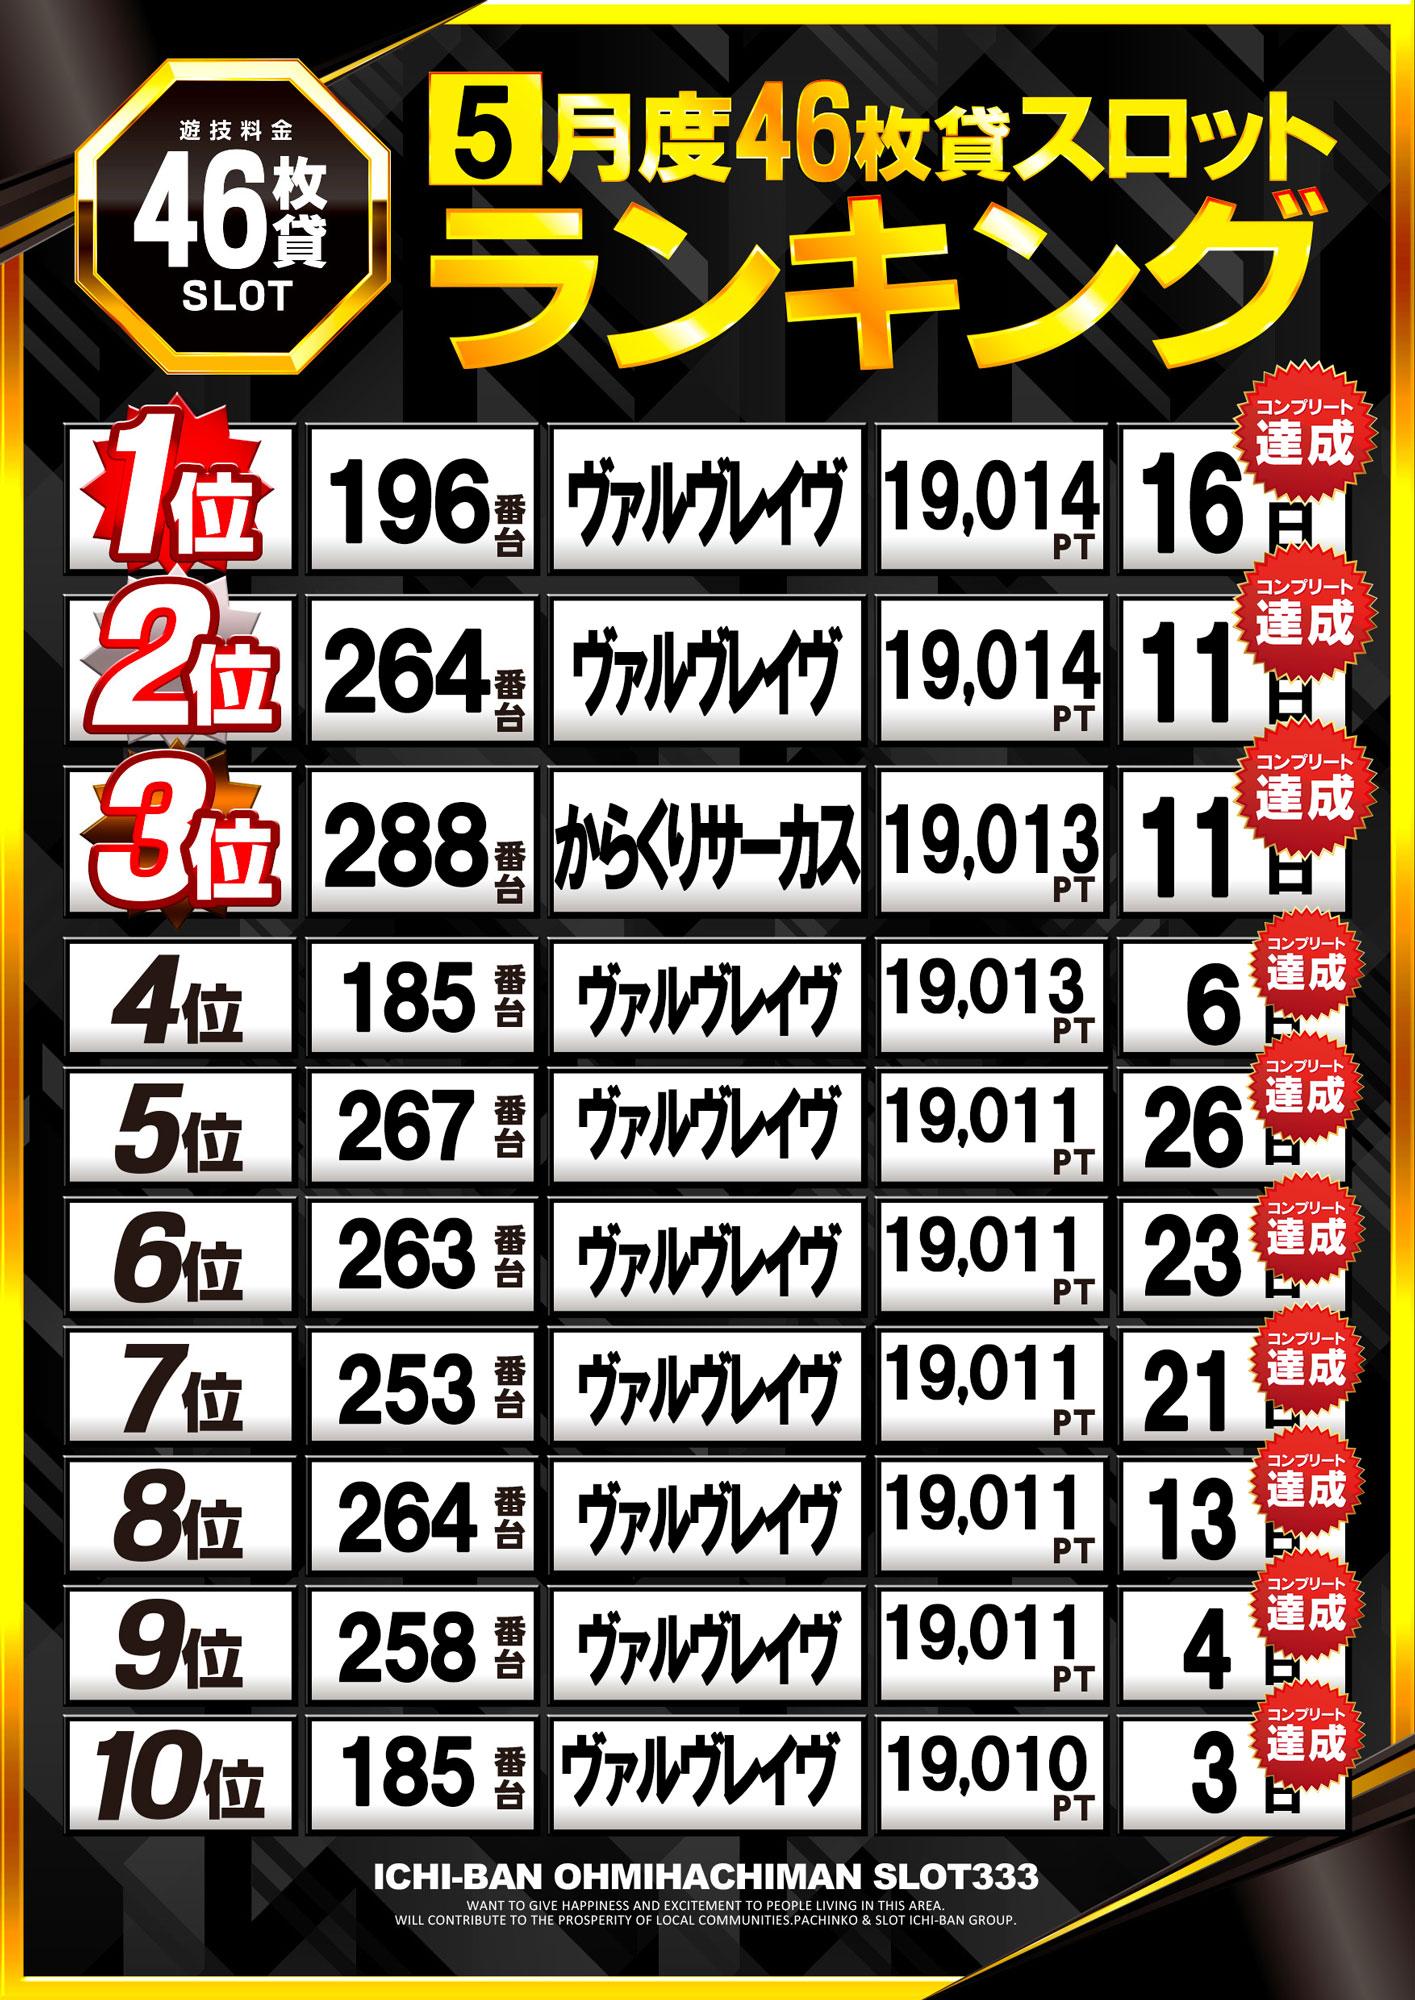 ICHI-BAN近江八幡店 SLOT333のパチスロ出玉ランキング